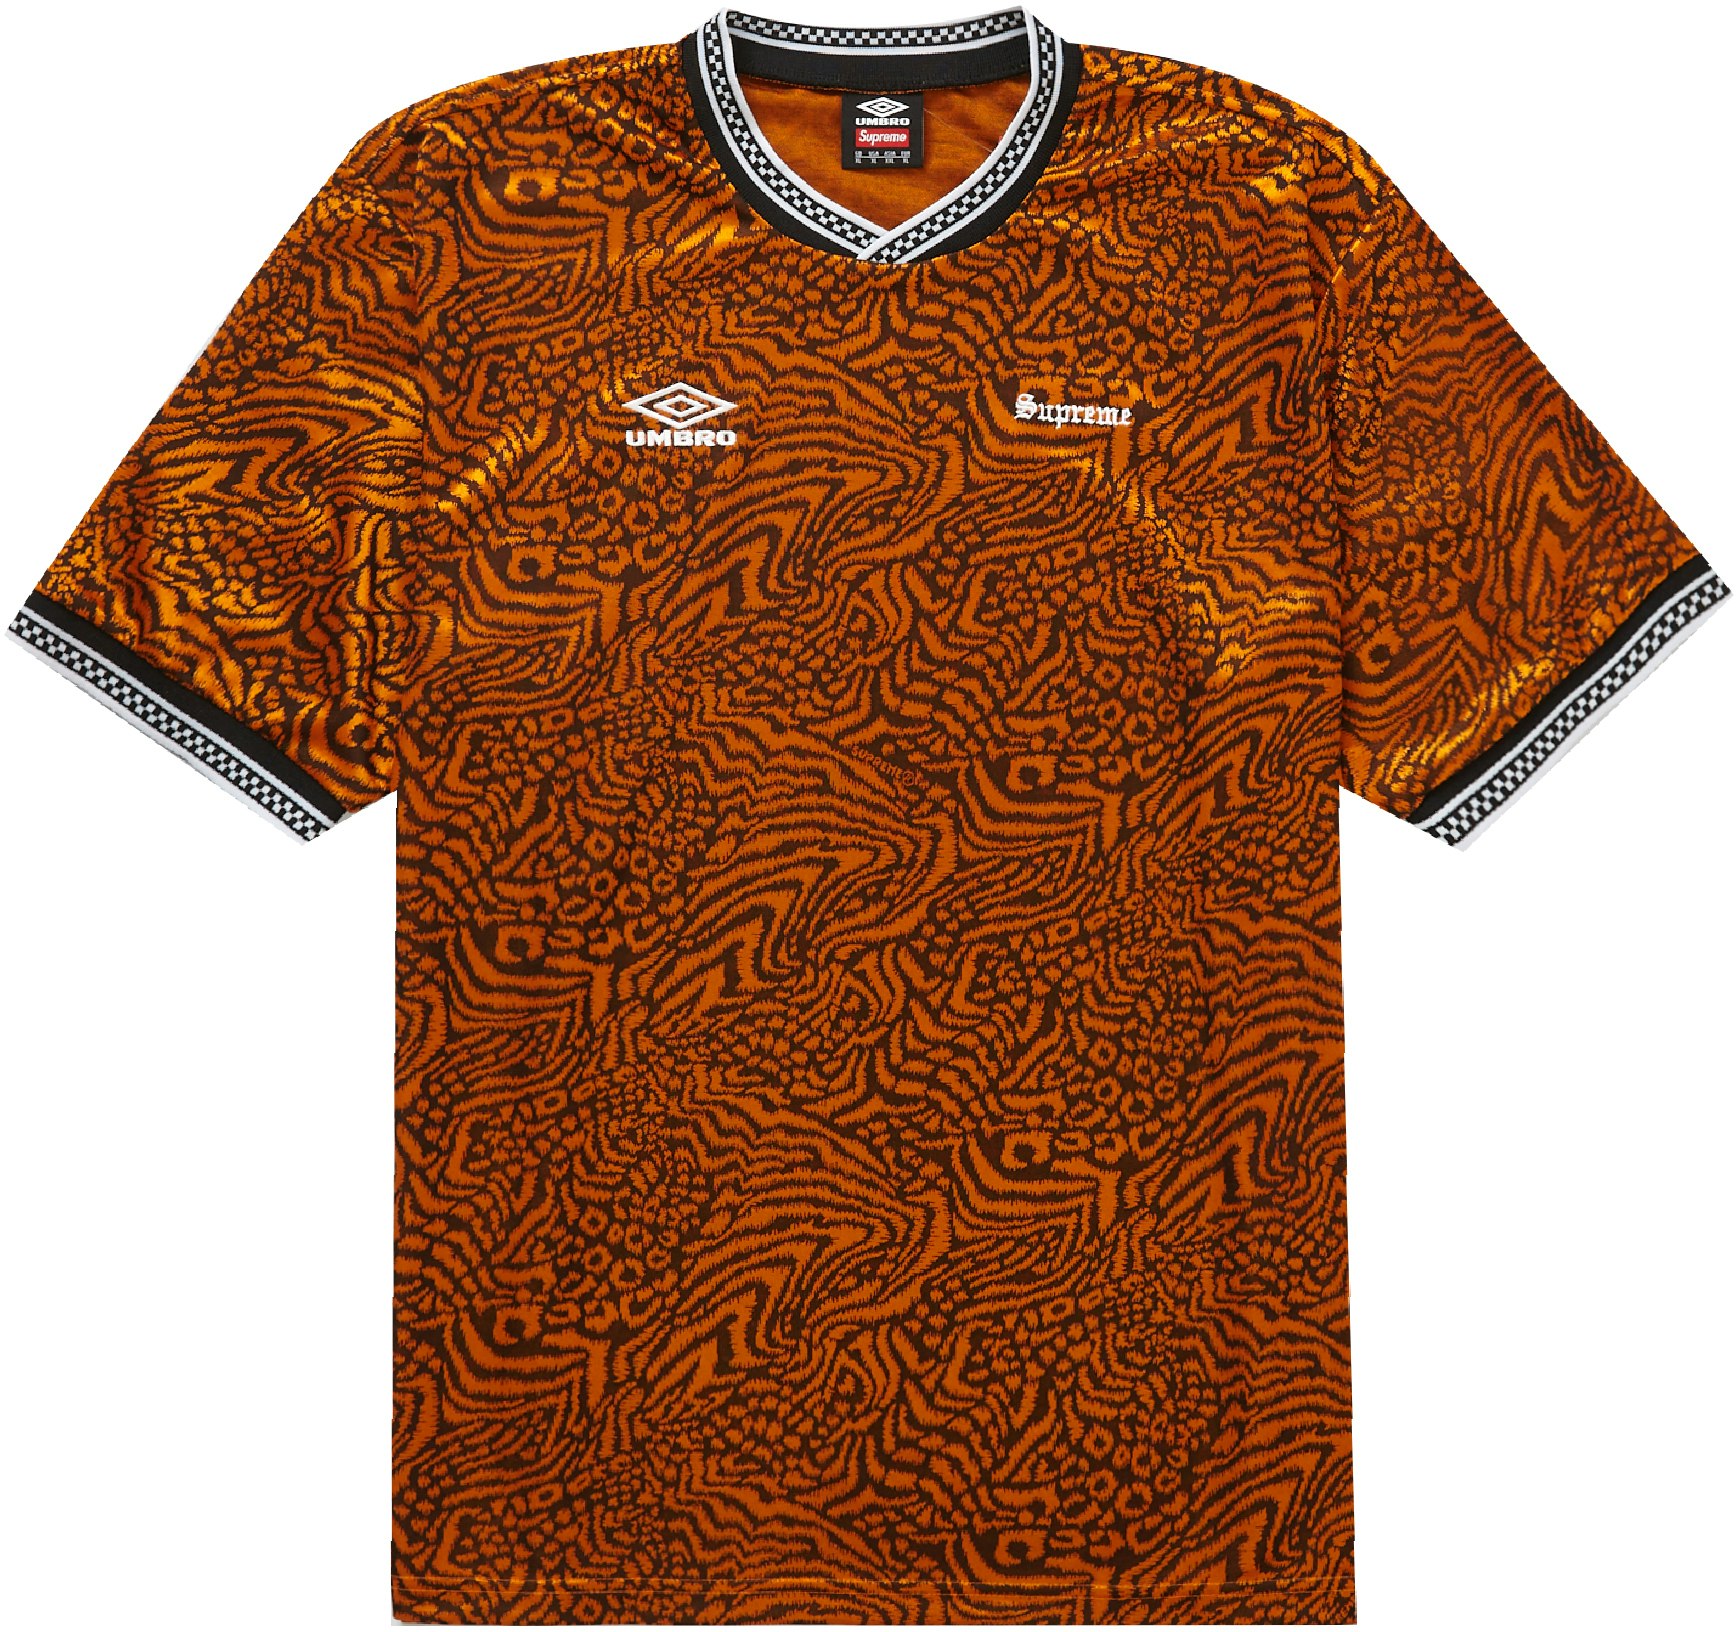 Supreme Umbro Jacquard Animal Print Soccer Jersey Orange